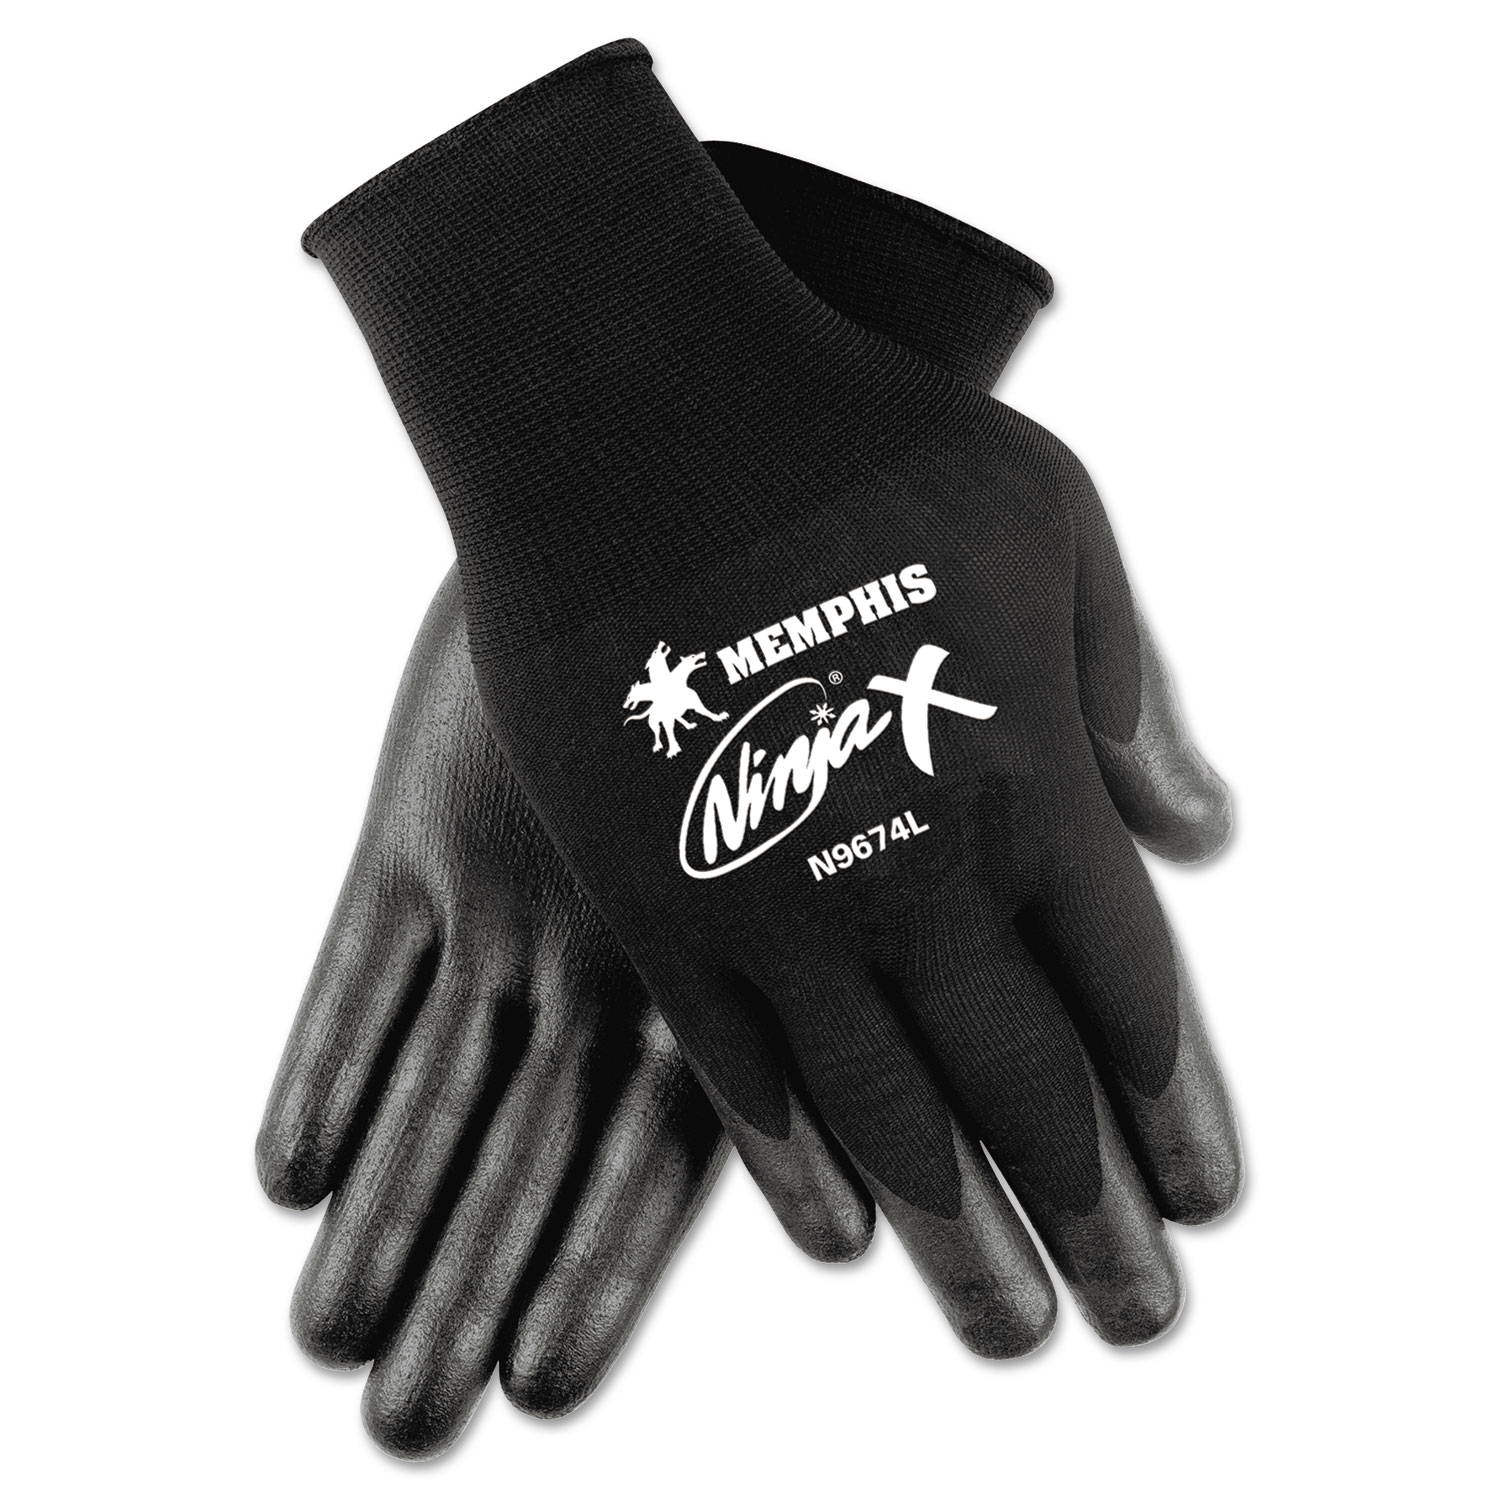  MCR Safety N9674XL Ninja x Bi-Polymer Coated Gloves, X-Large, Black, Pair (CRWN9674XL) 